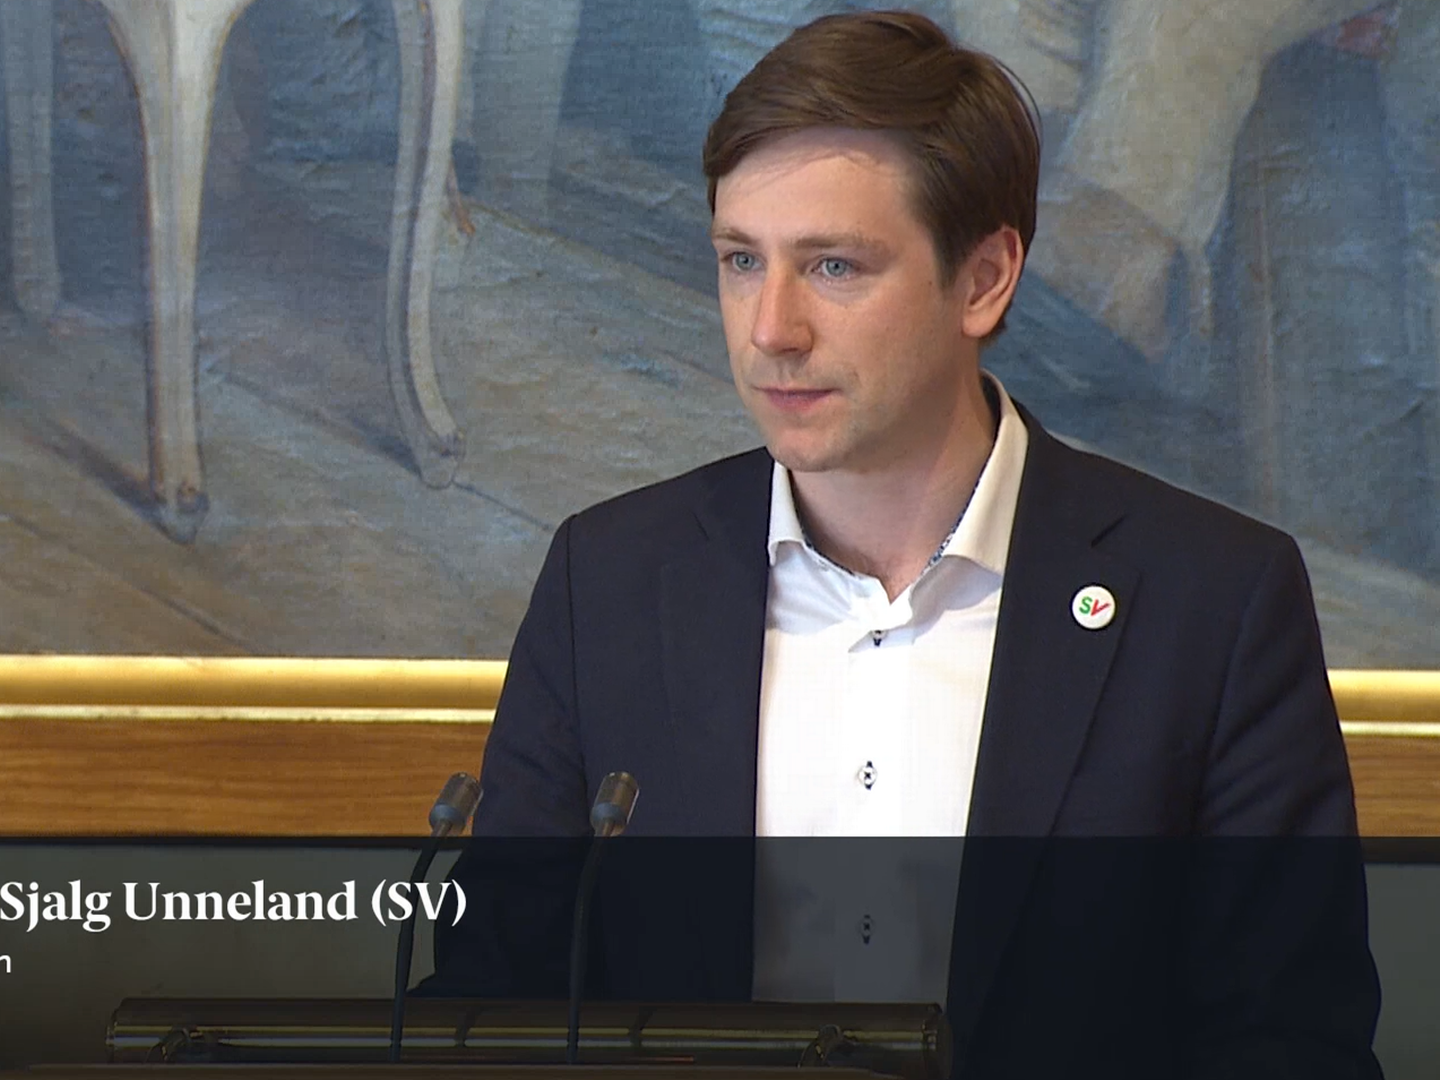 FIKK IKKE FLERTALL: SVs justispolitiske talsperson, Andreas Sjalg Unneland. | Foto: Stortinget